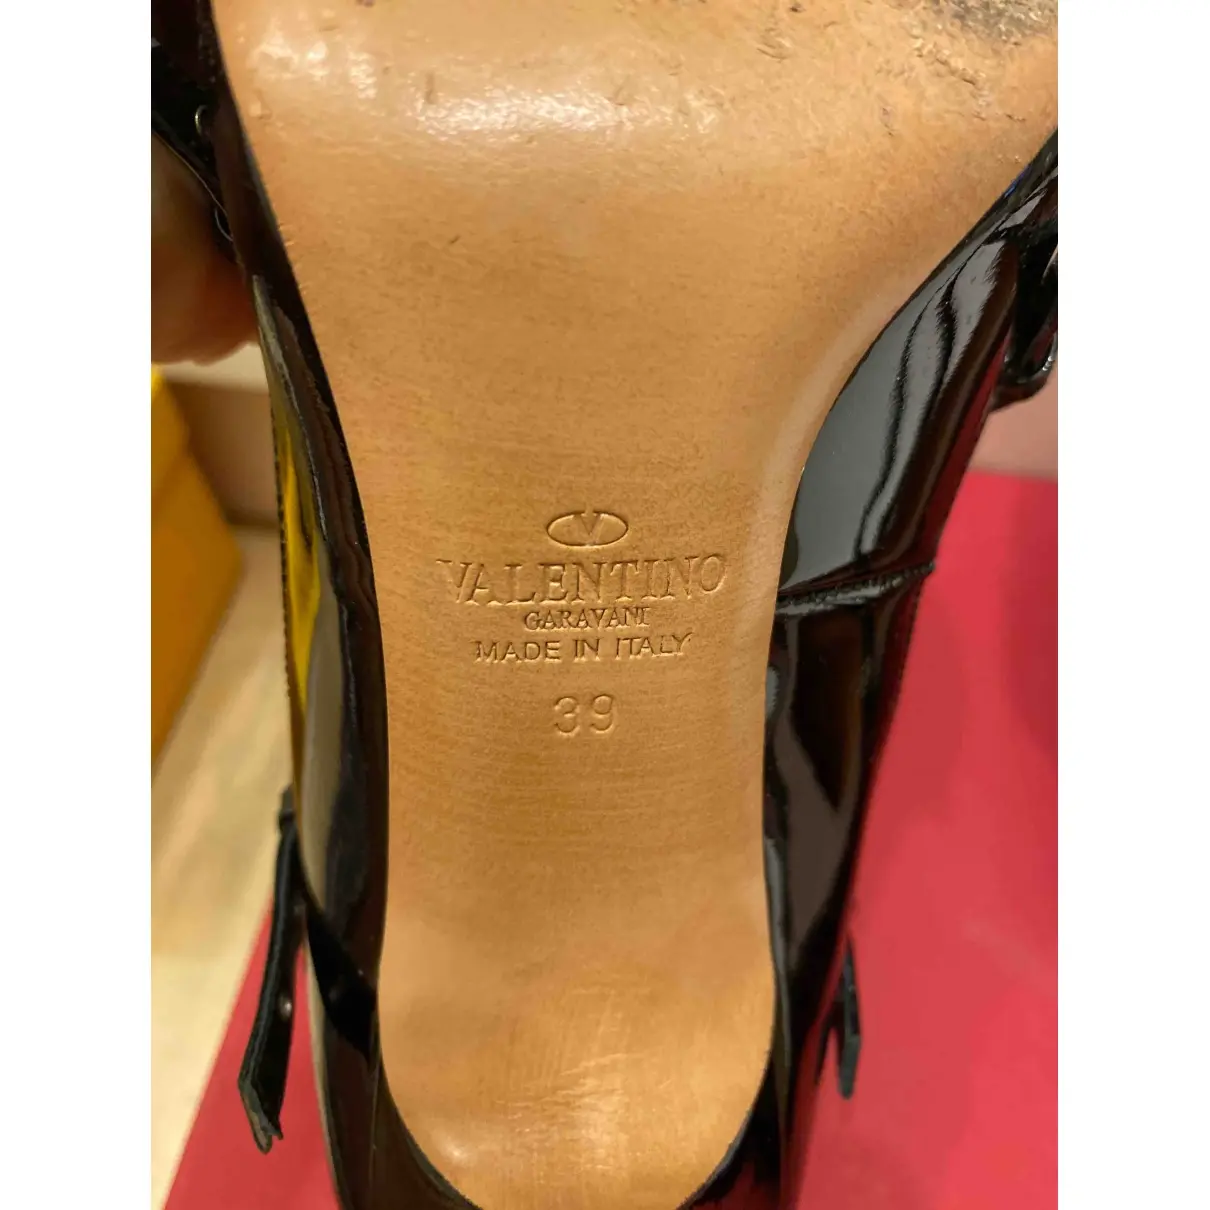 Buy Valentino Garavani Studwrap patent leather heels online